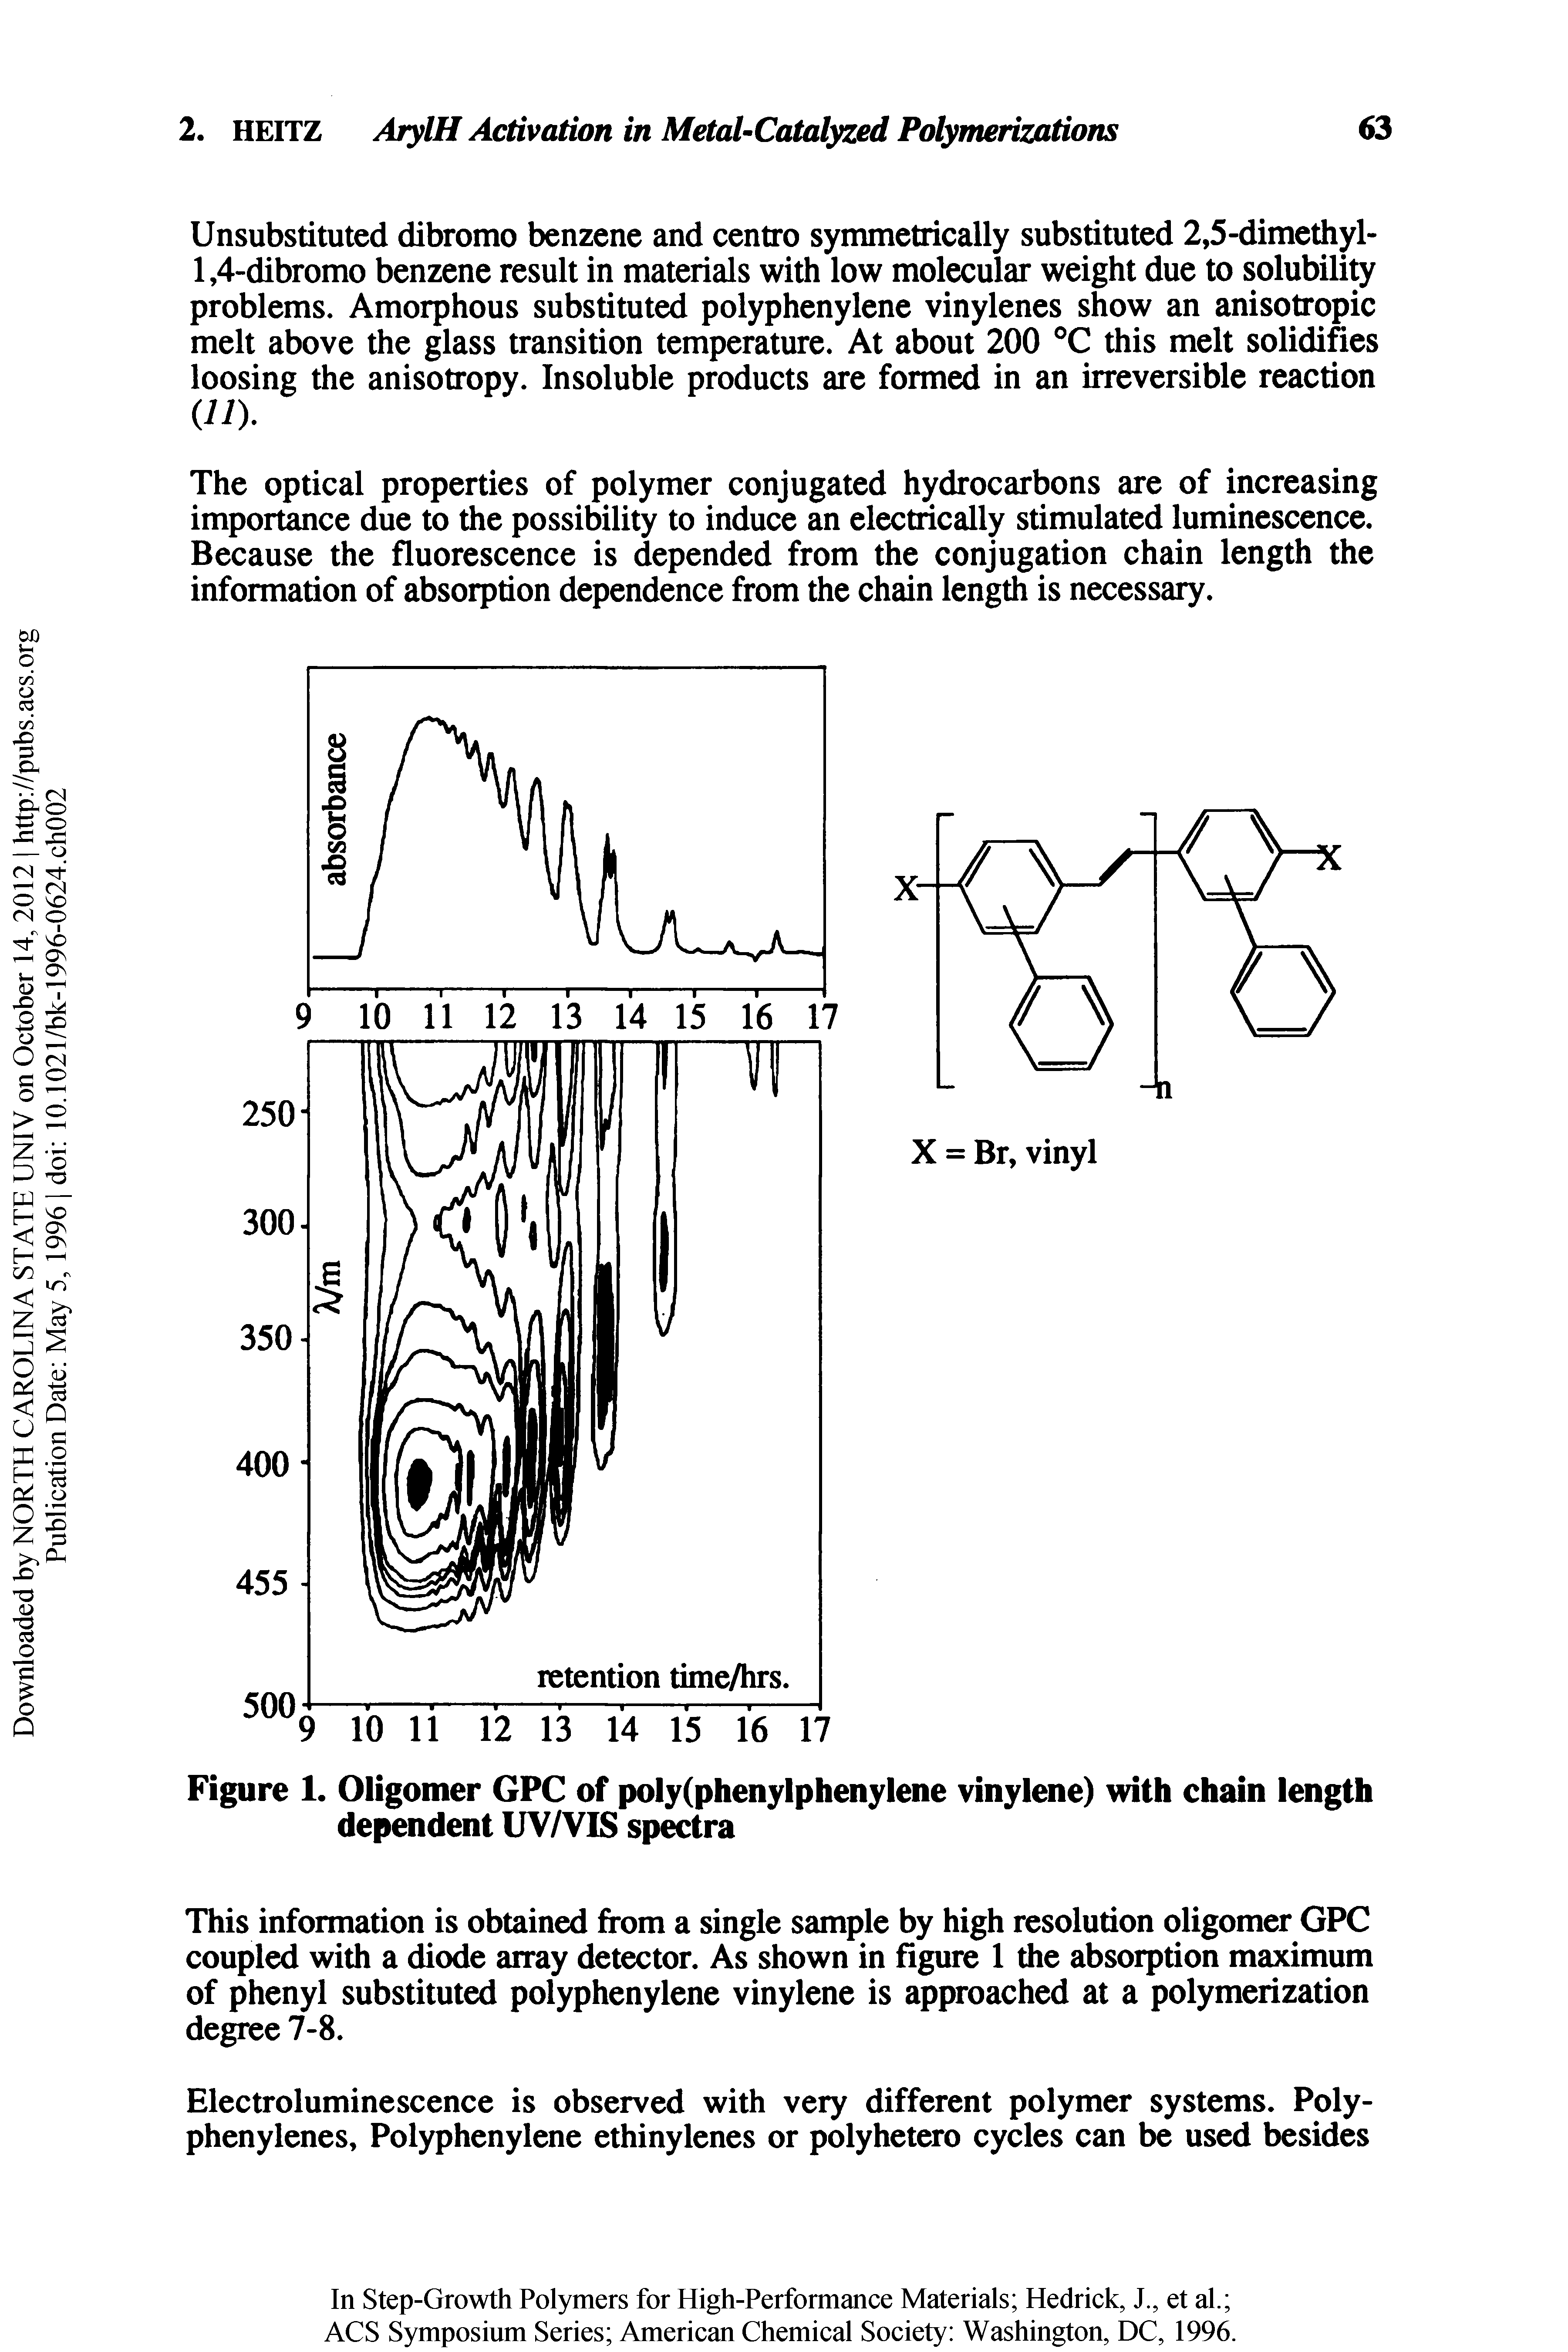 Figure 1. Oligomer GPC of poly(phenylphenylene vinylene) with chain length dependent UV/VIS spectra...